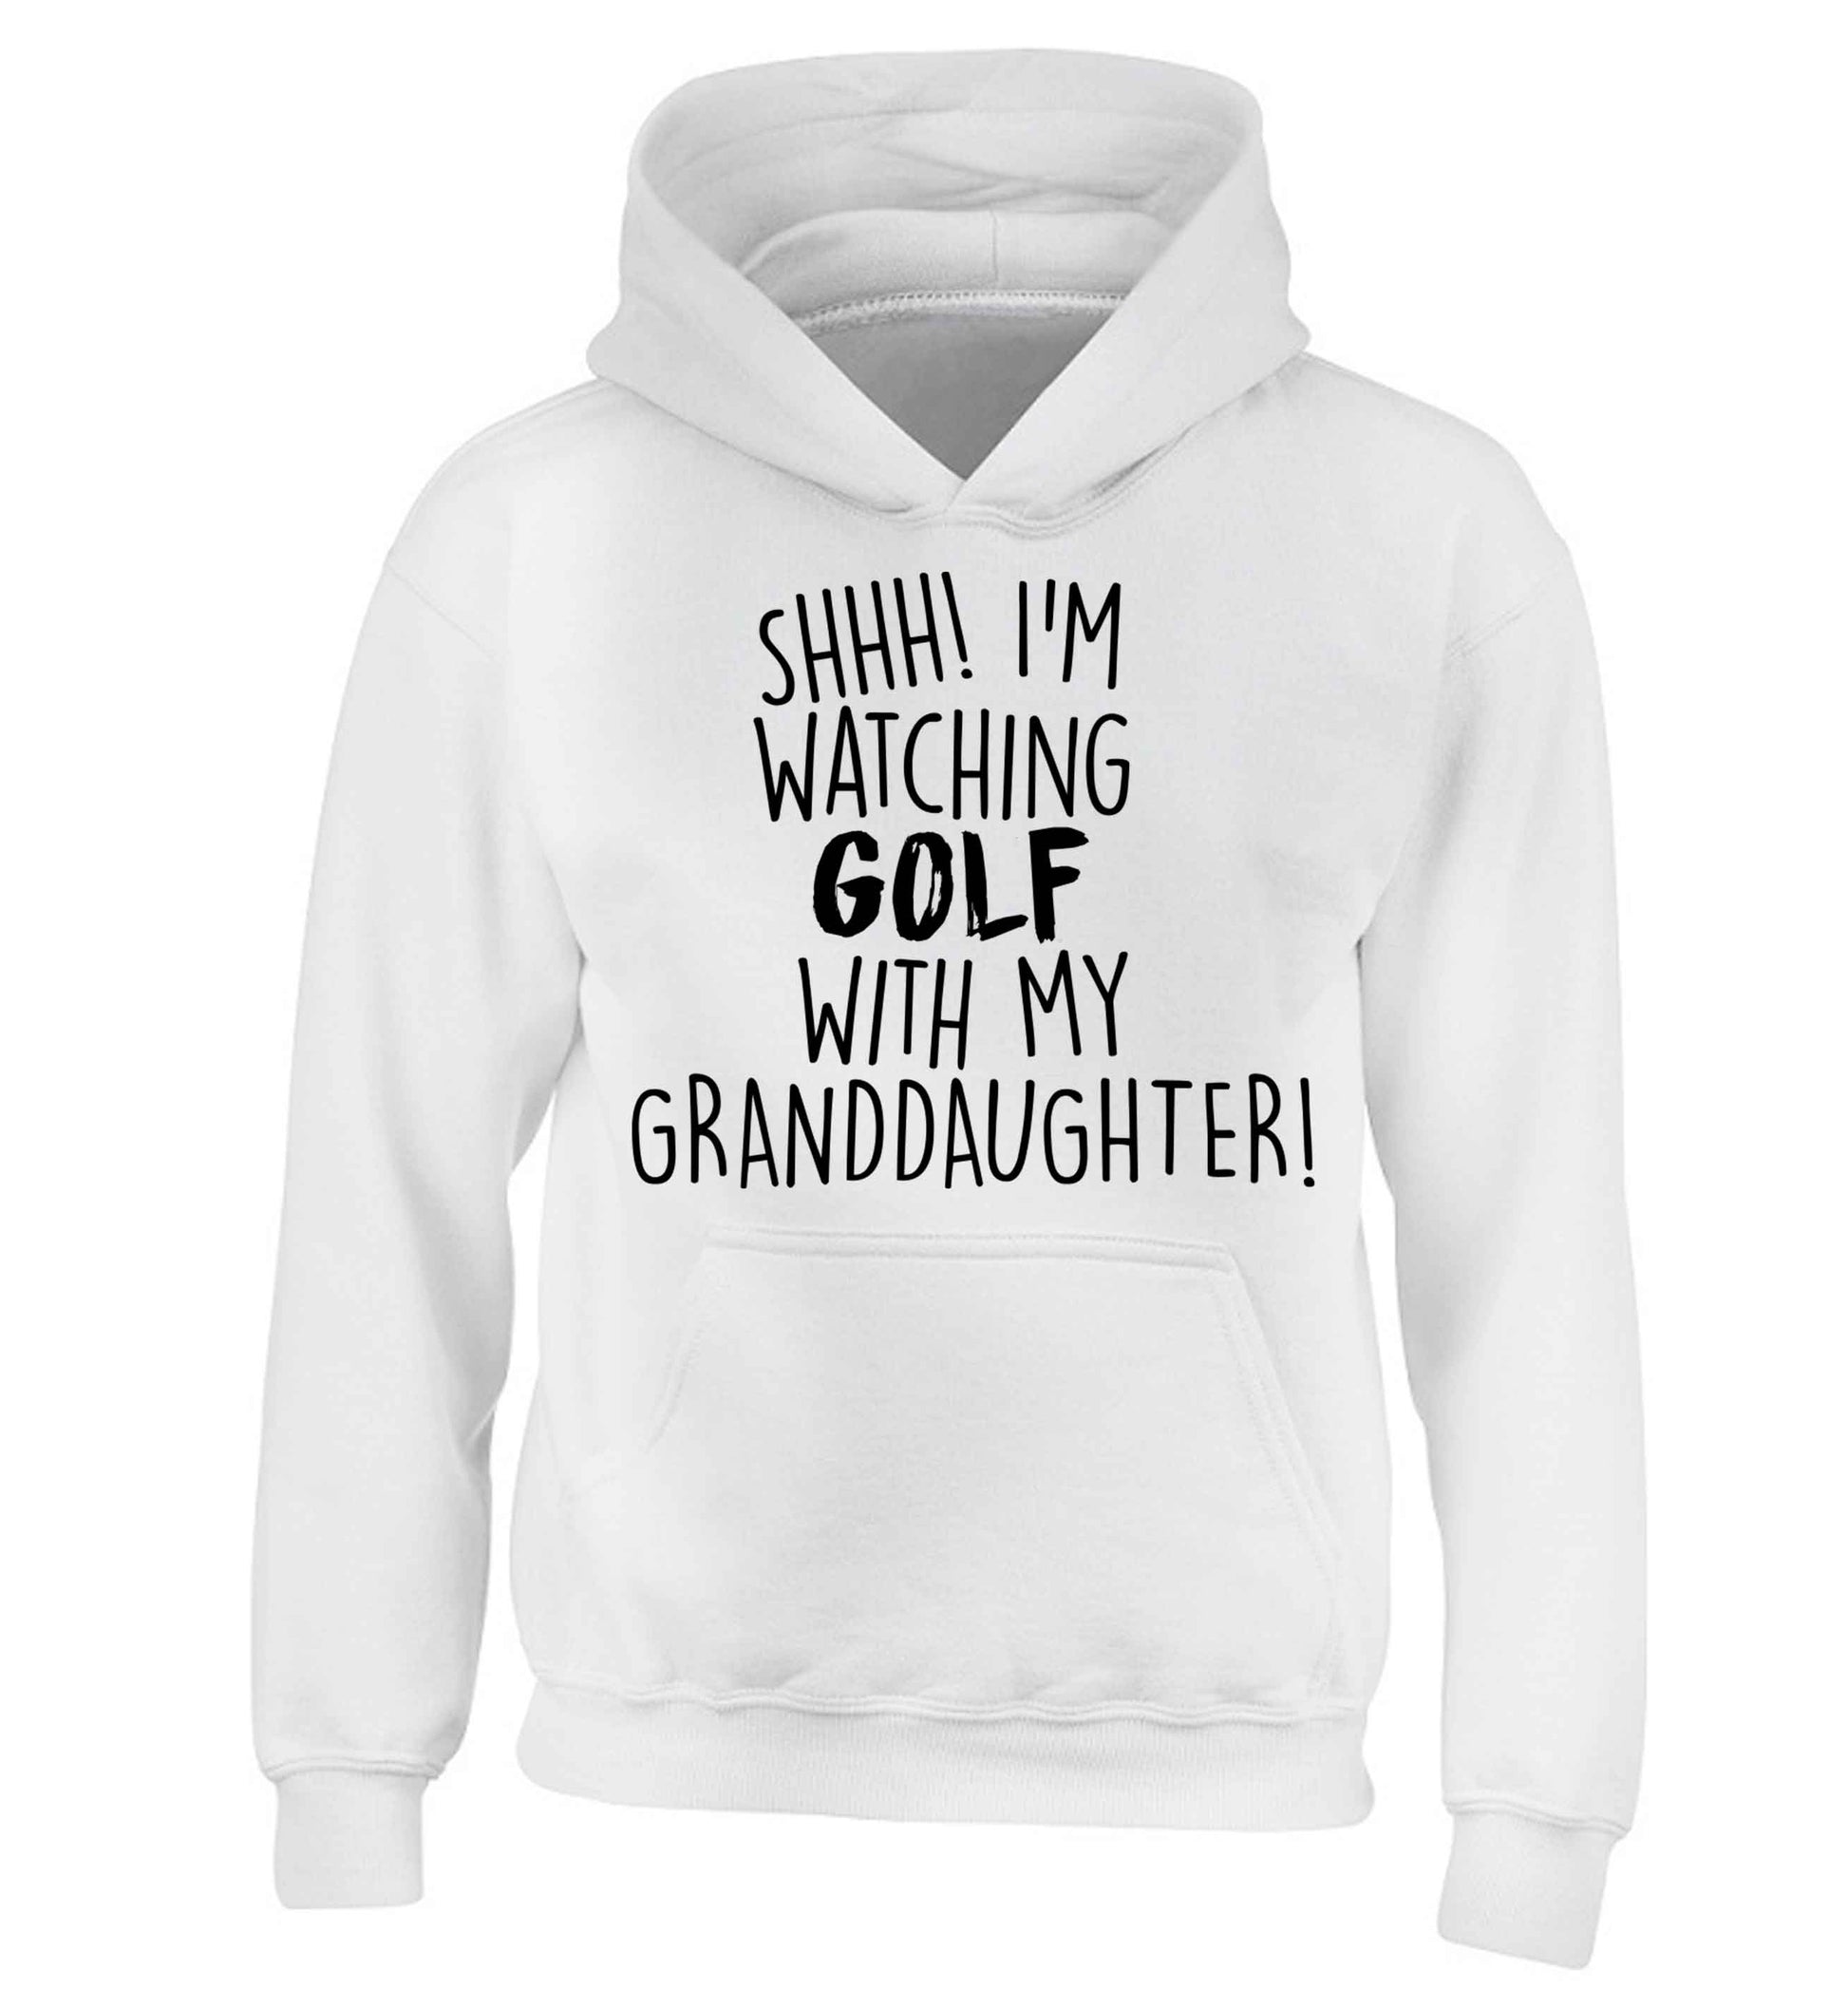 Shh I'm watching golf with my granddaughter children's white hoodie 12-13 Years